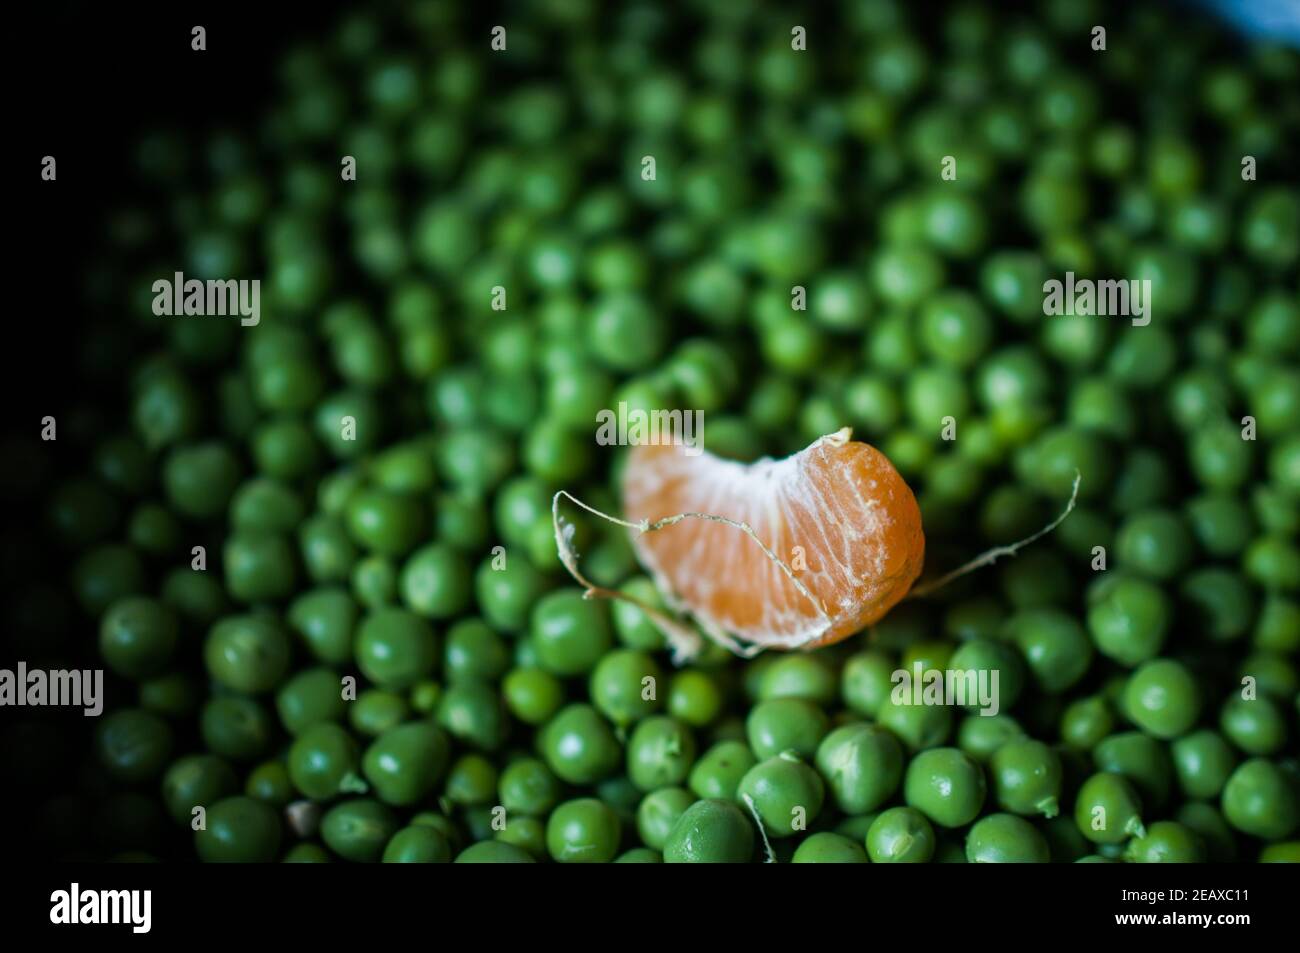 Closeup image of orange on green peas Stock Photo